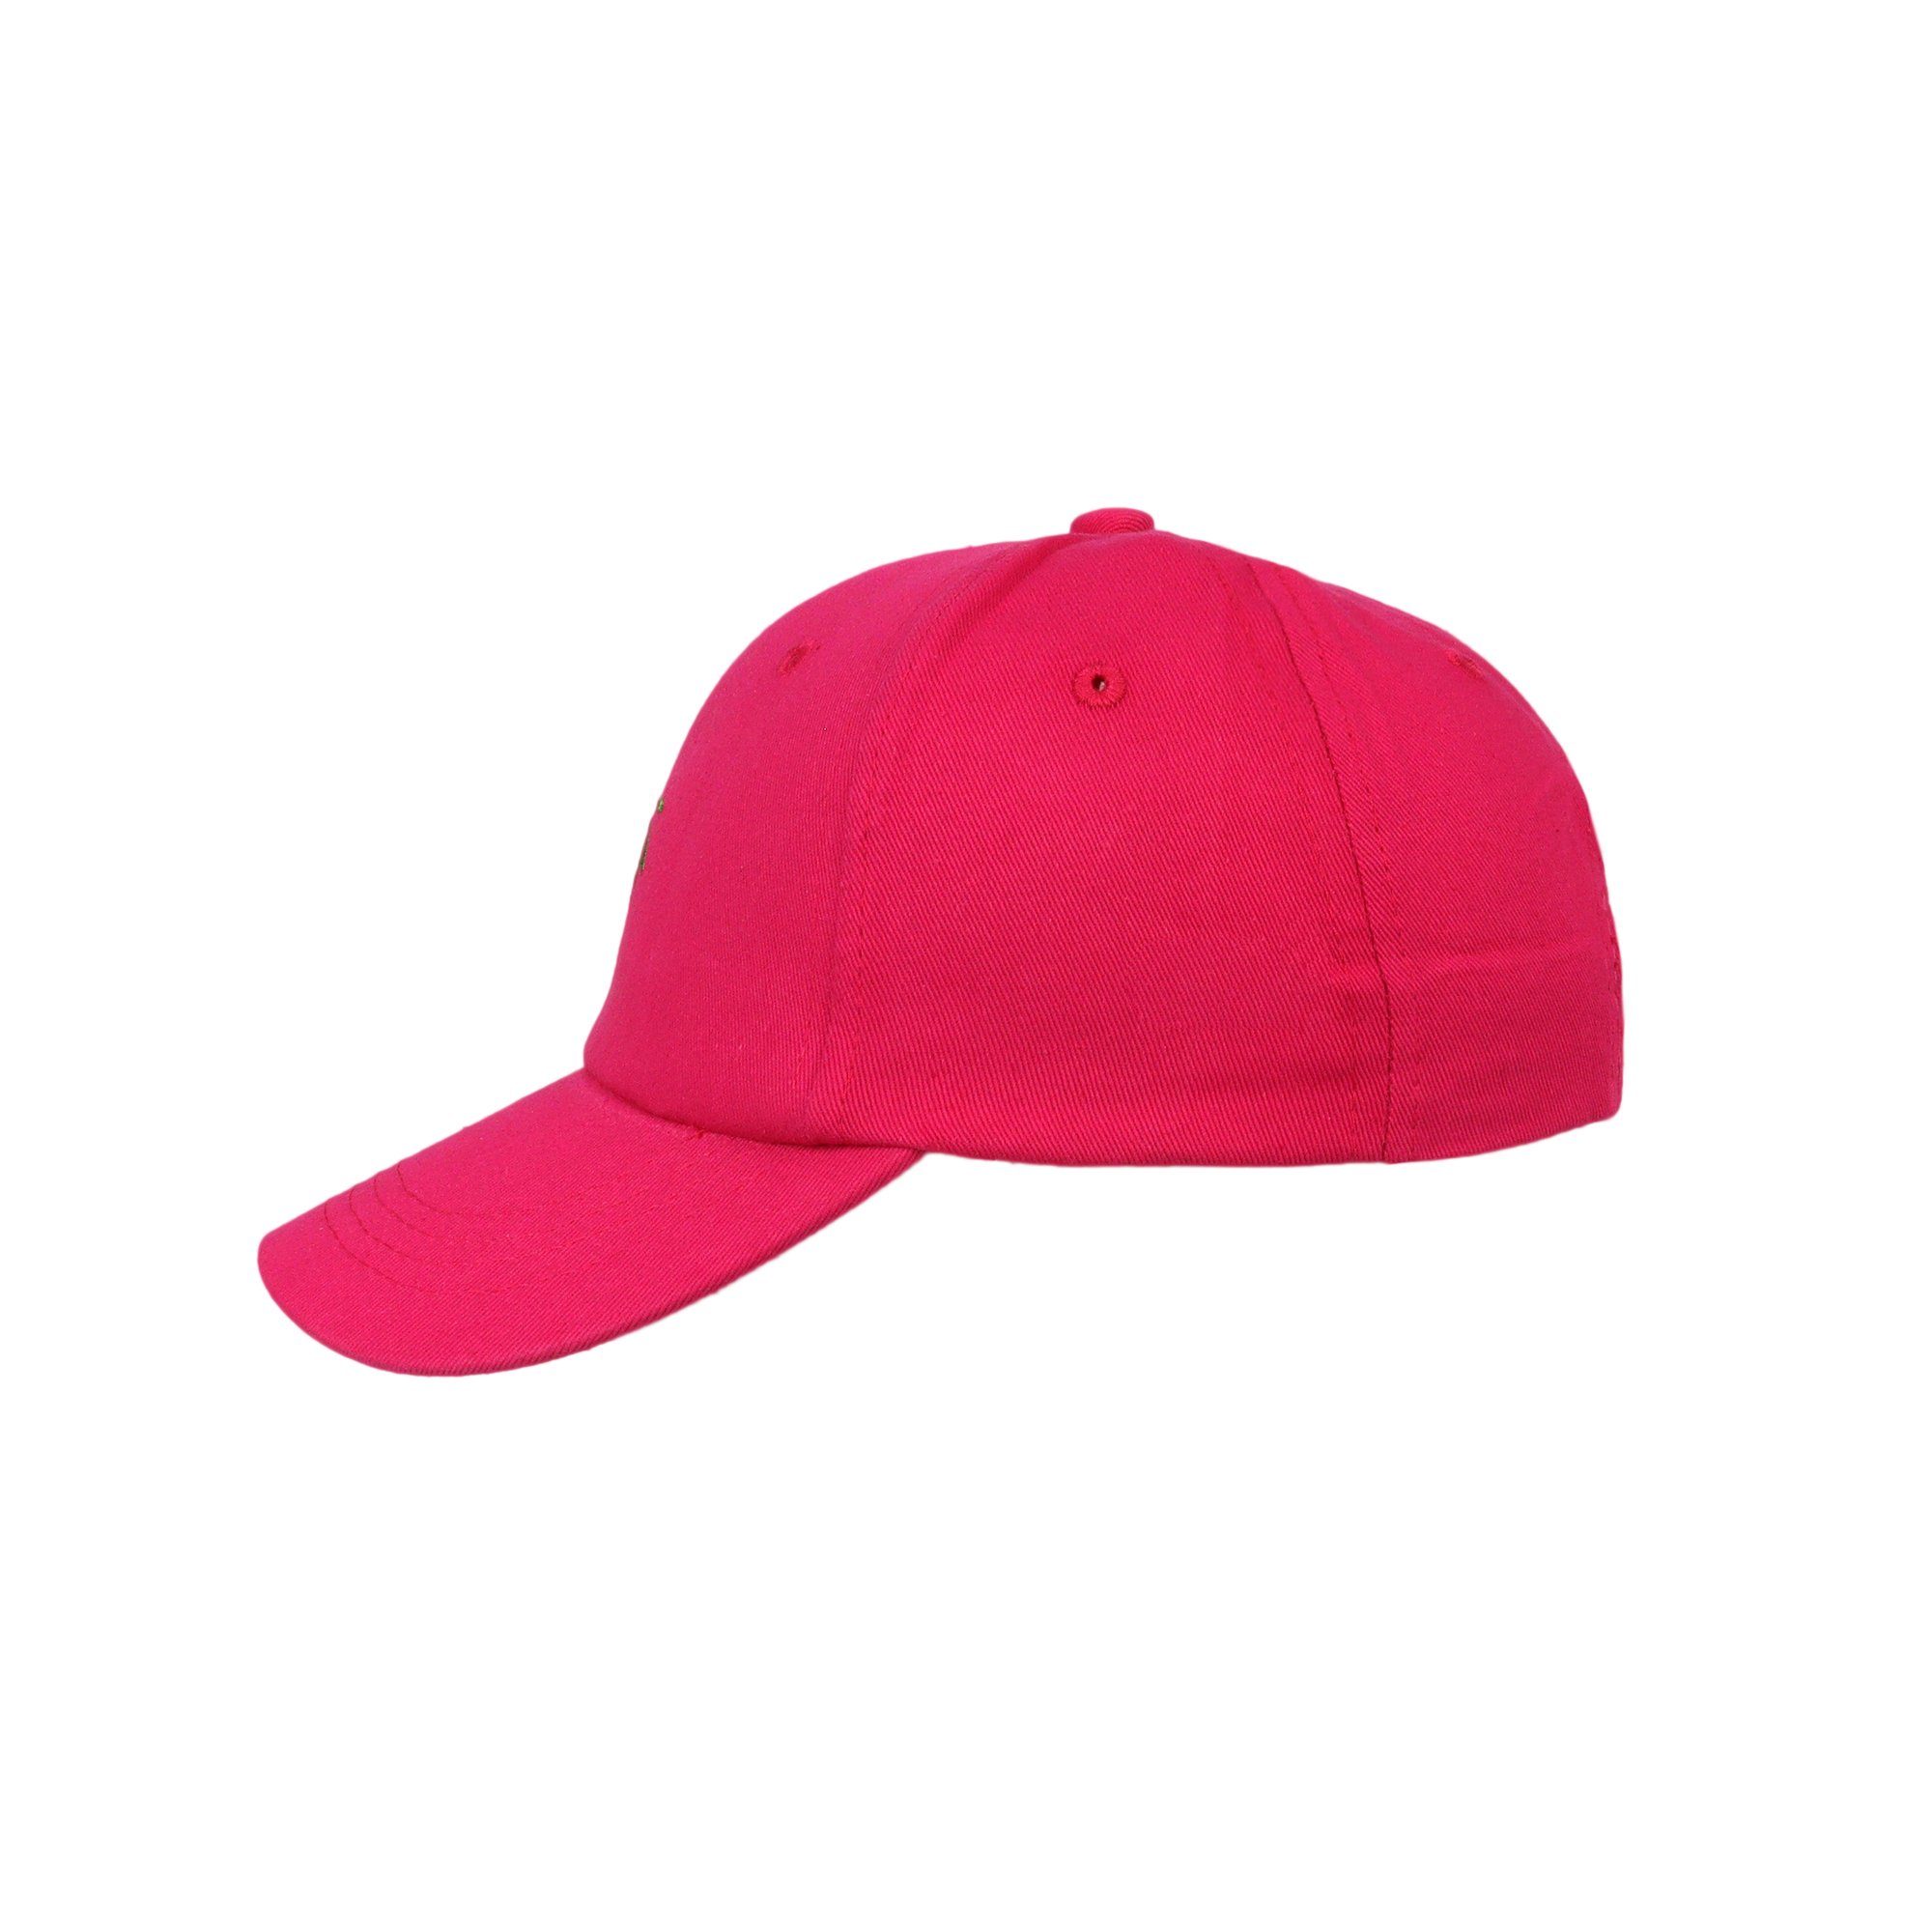 Kinder ZEBRO Cap Cap Baseball Belüftungslöcher pink mit